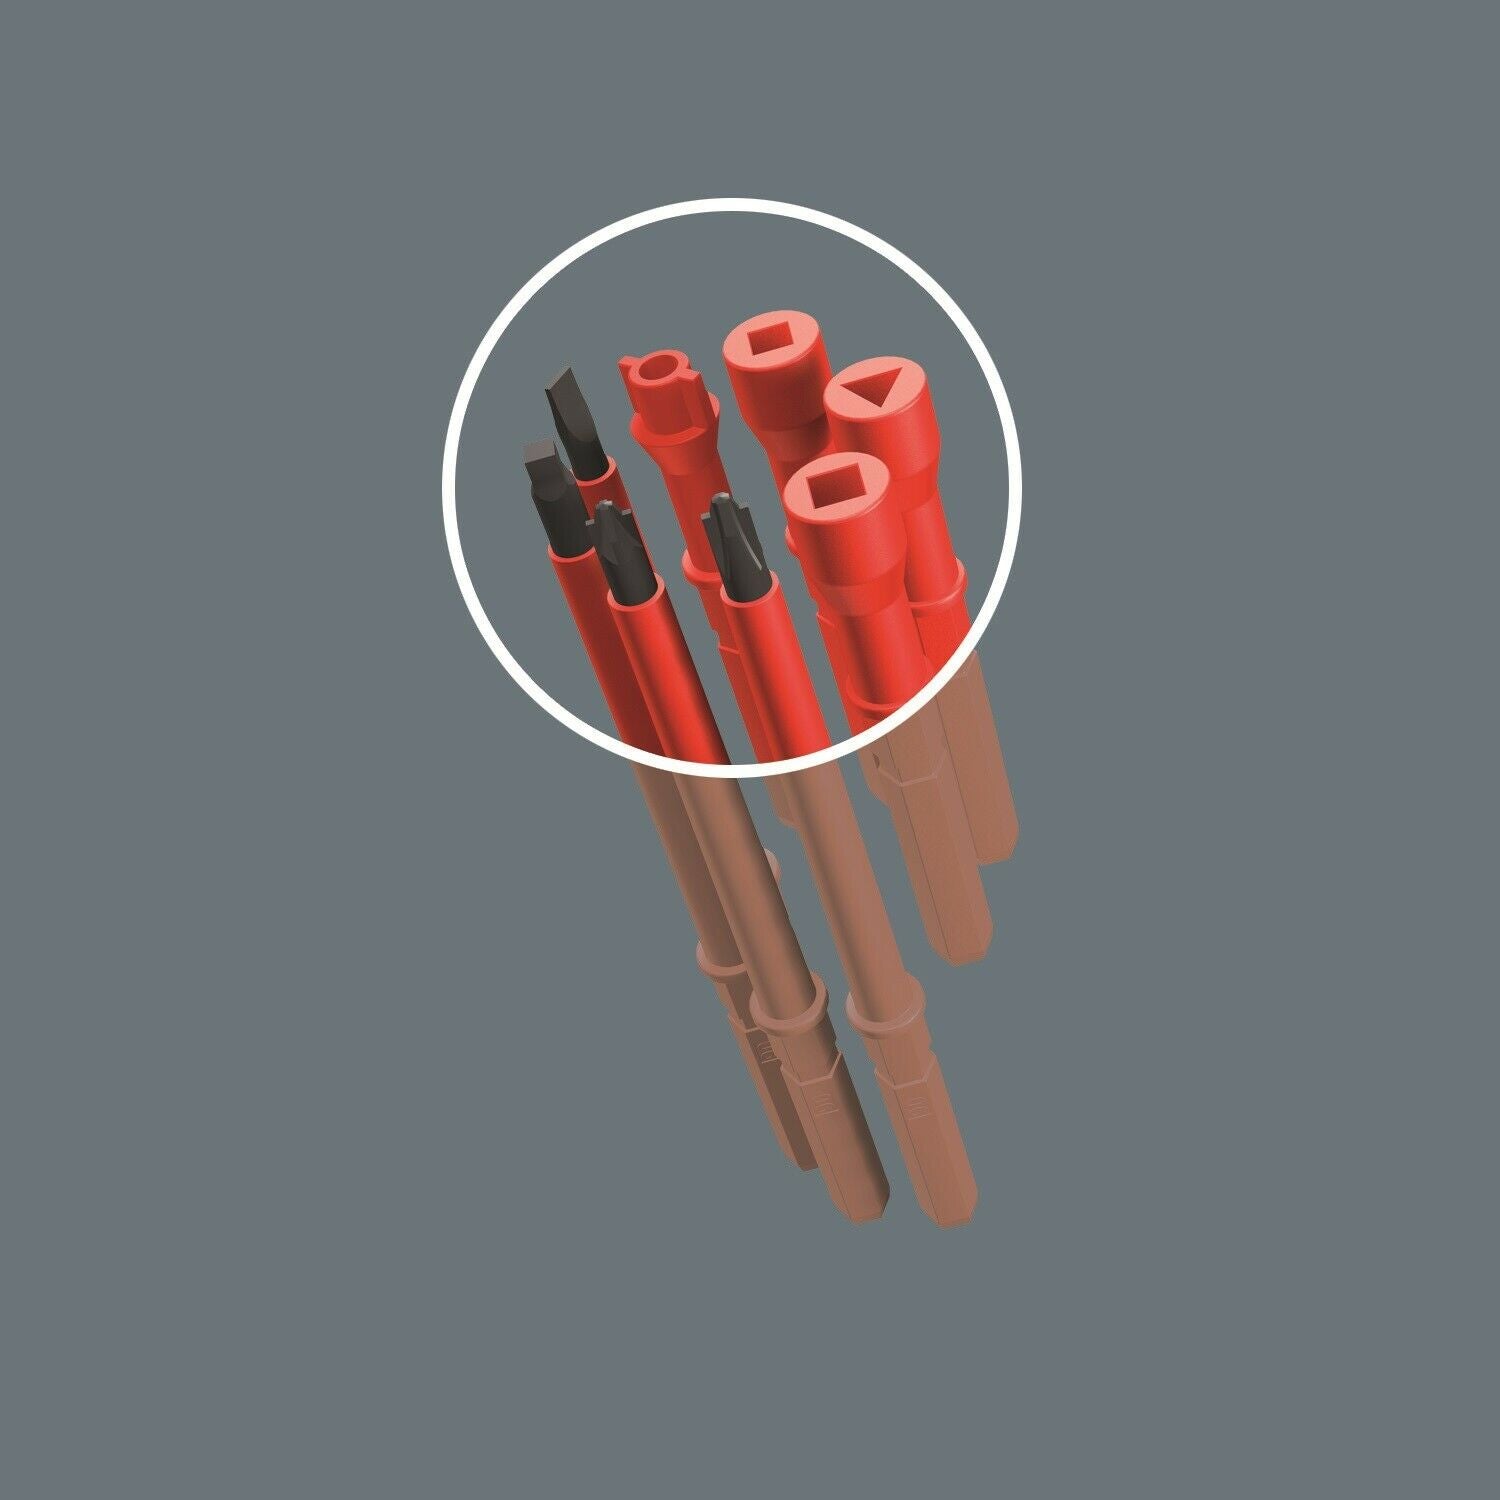 wera kraftform kompakt vde 7 insulated screwdriver set imperial 05003473001